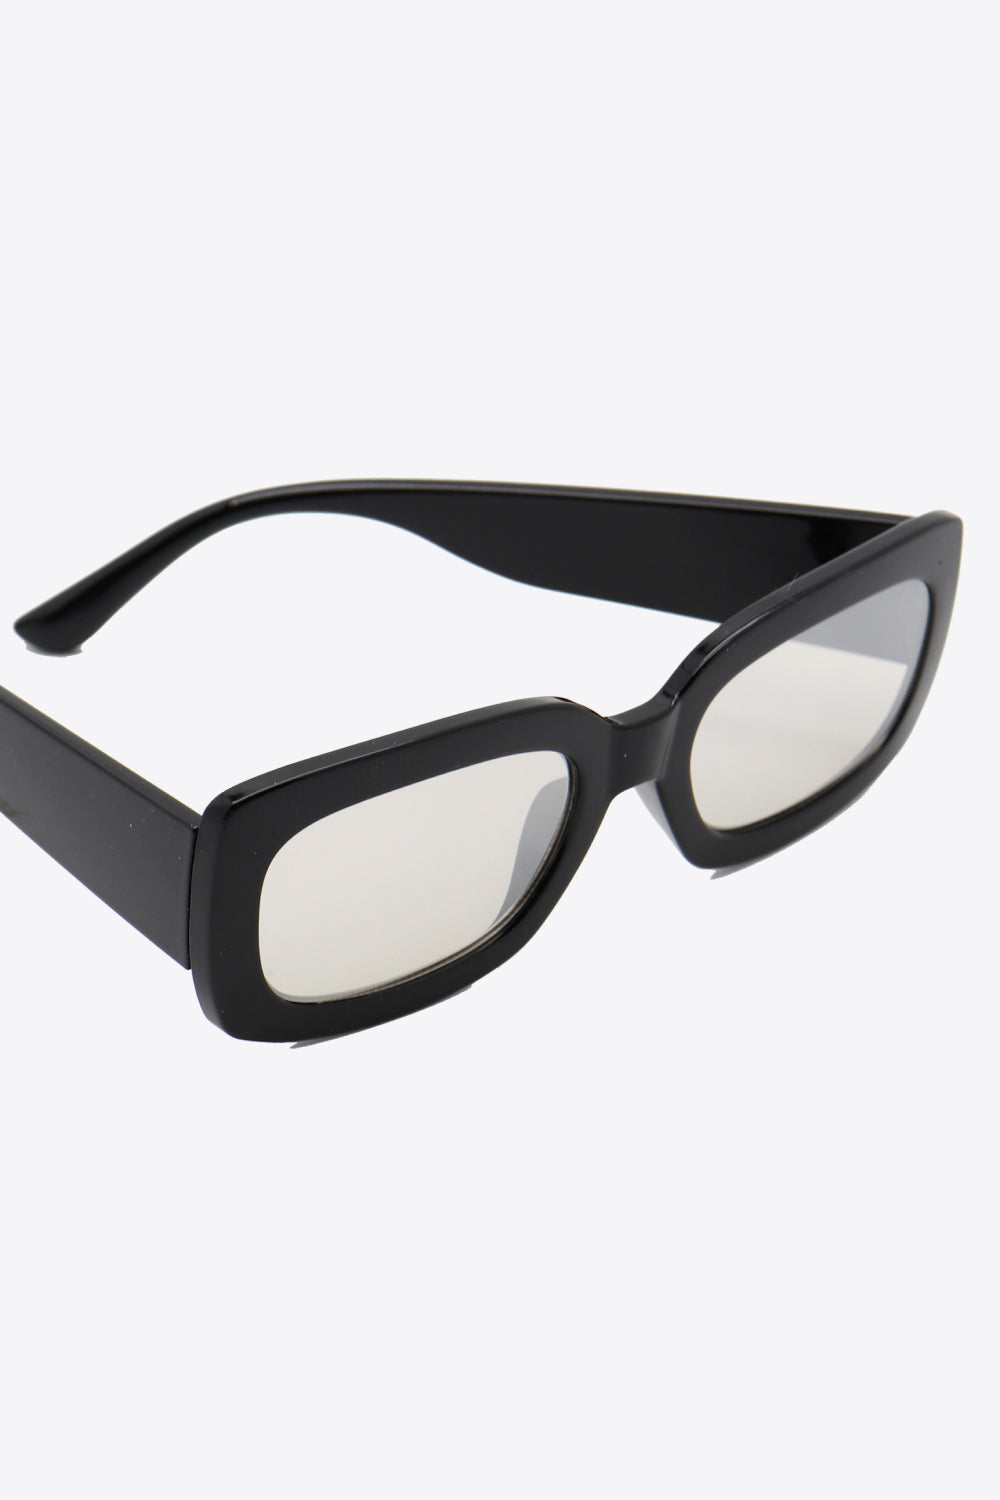 Polycarbonate Frame Rectangle Sunglasses - The Fashion Unicorn